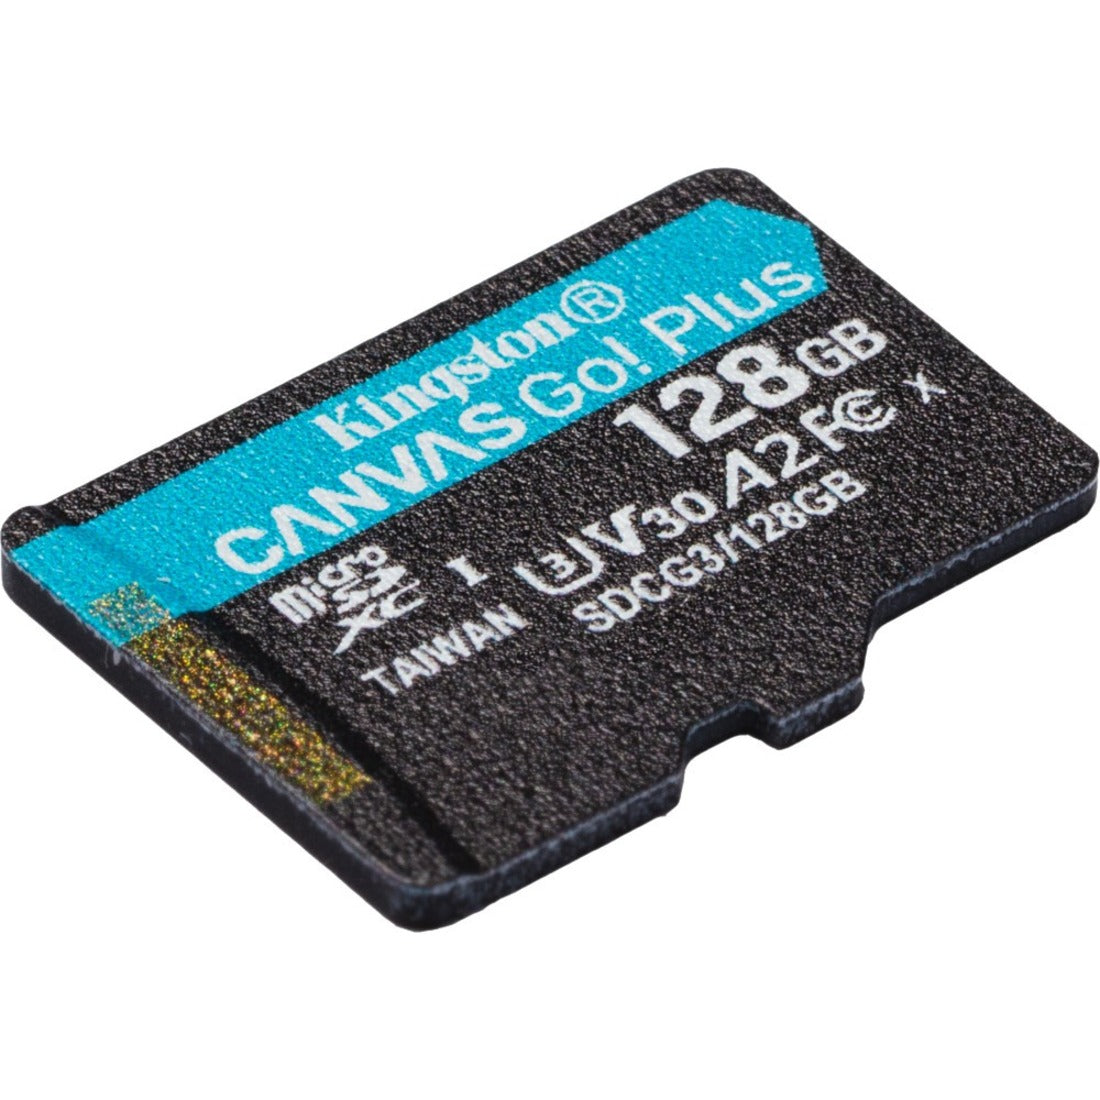 Kingston SDCG3/128GBSP Canvas Go! Plus microSD Memory Card, 128GB, 170MB/s Read Speed, Class 10/UHS-I (U3), 90MB/s Write Speed